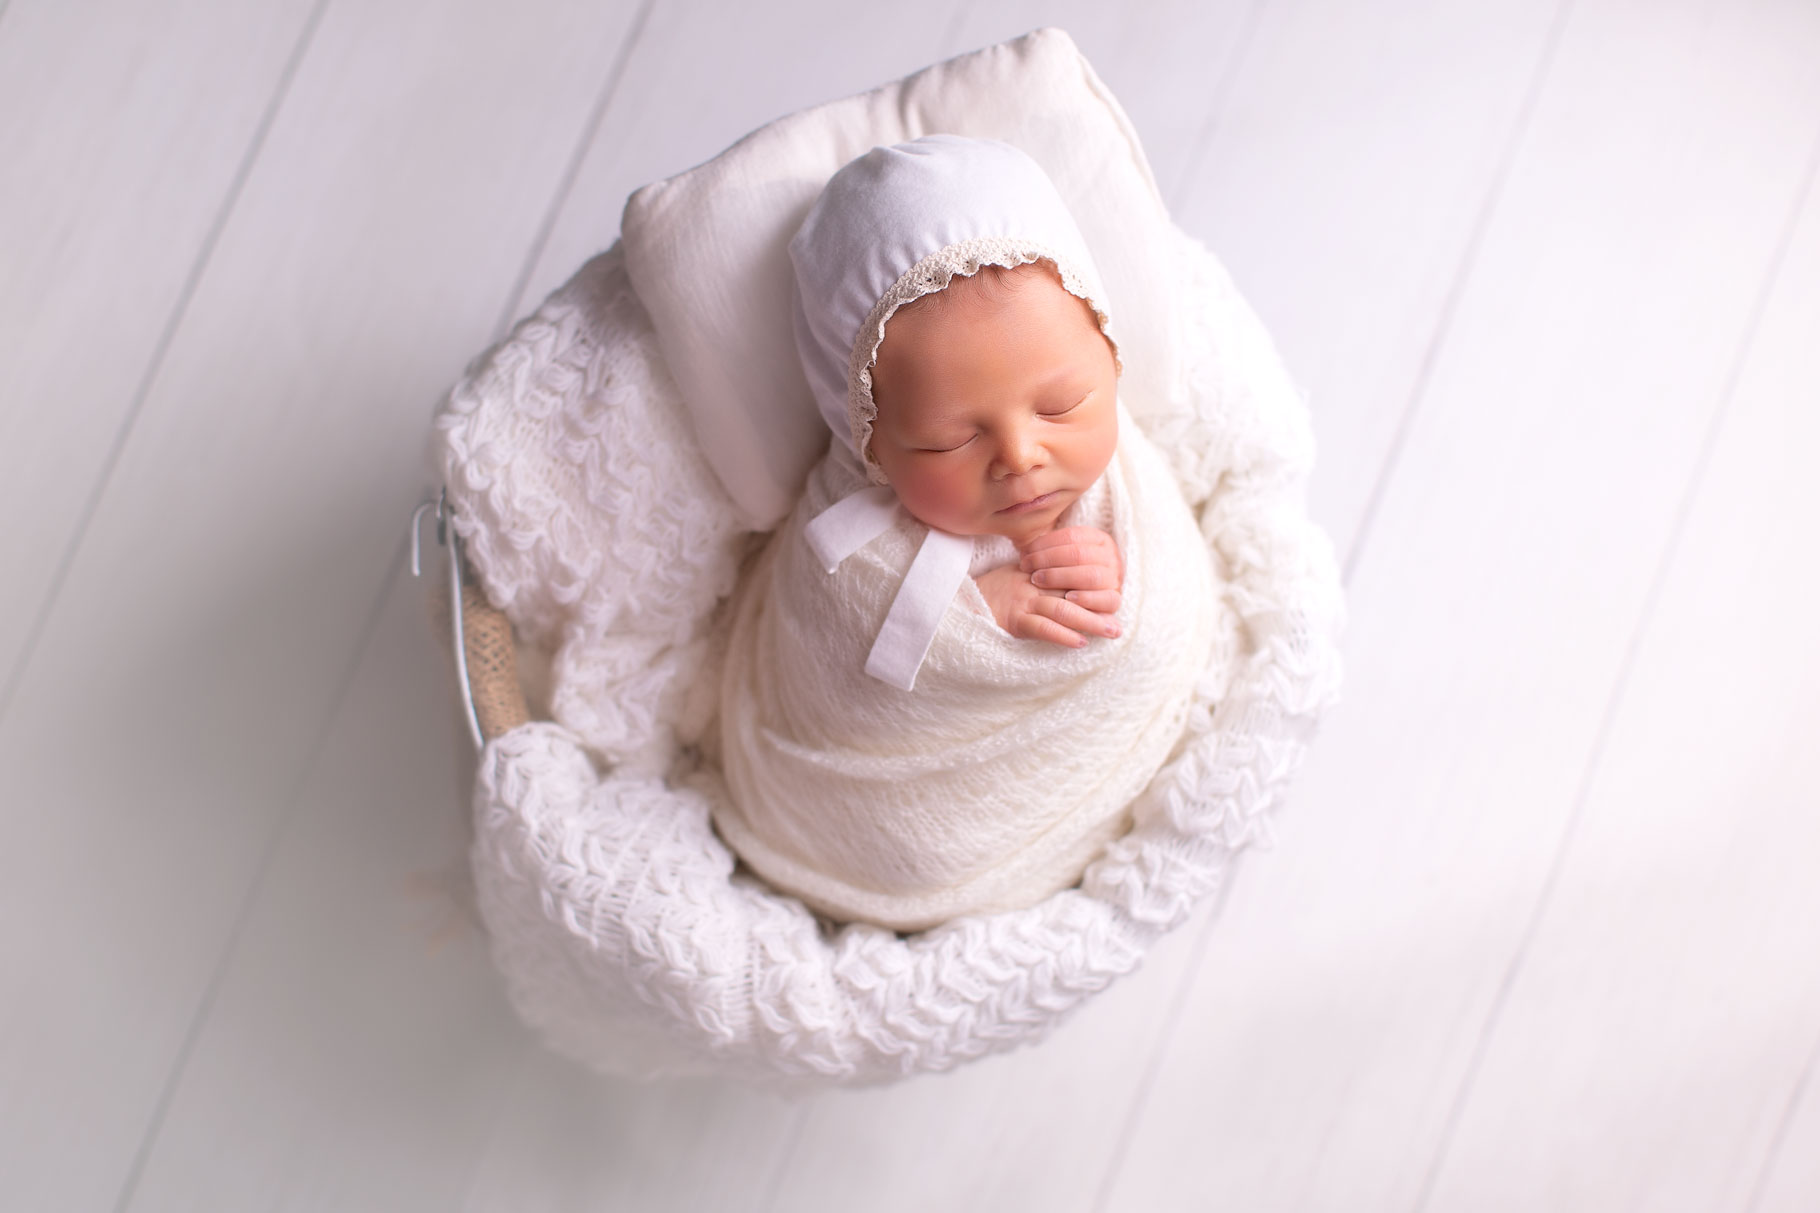 Newborn baby posed for newborn session